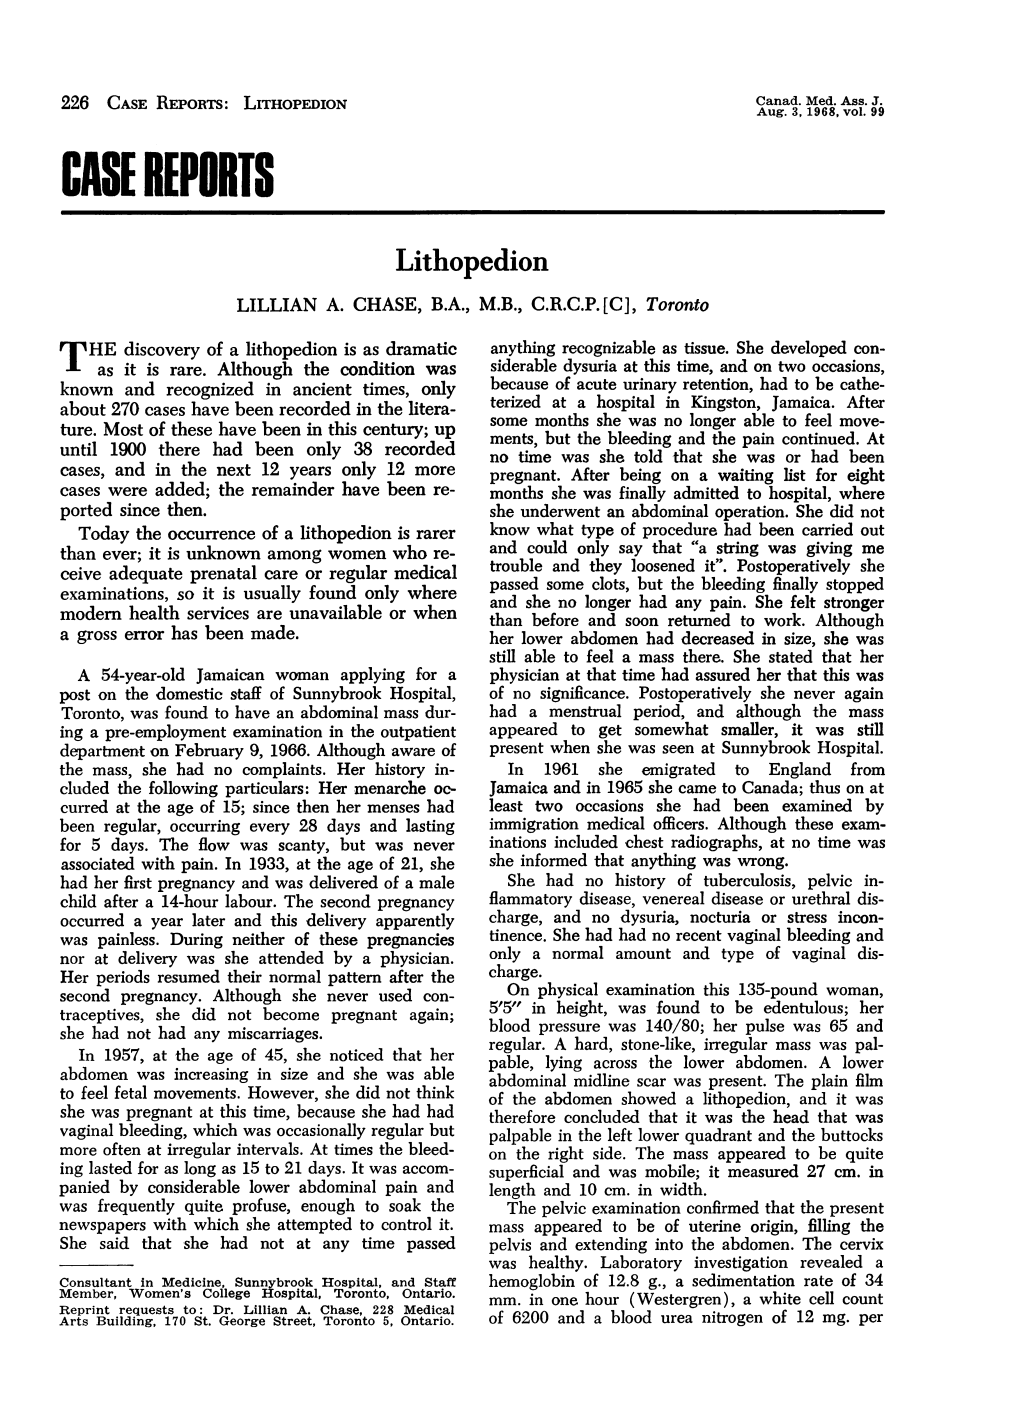 CASEREPORTS Lithopedion LILLIAN A